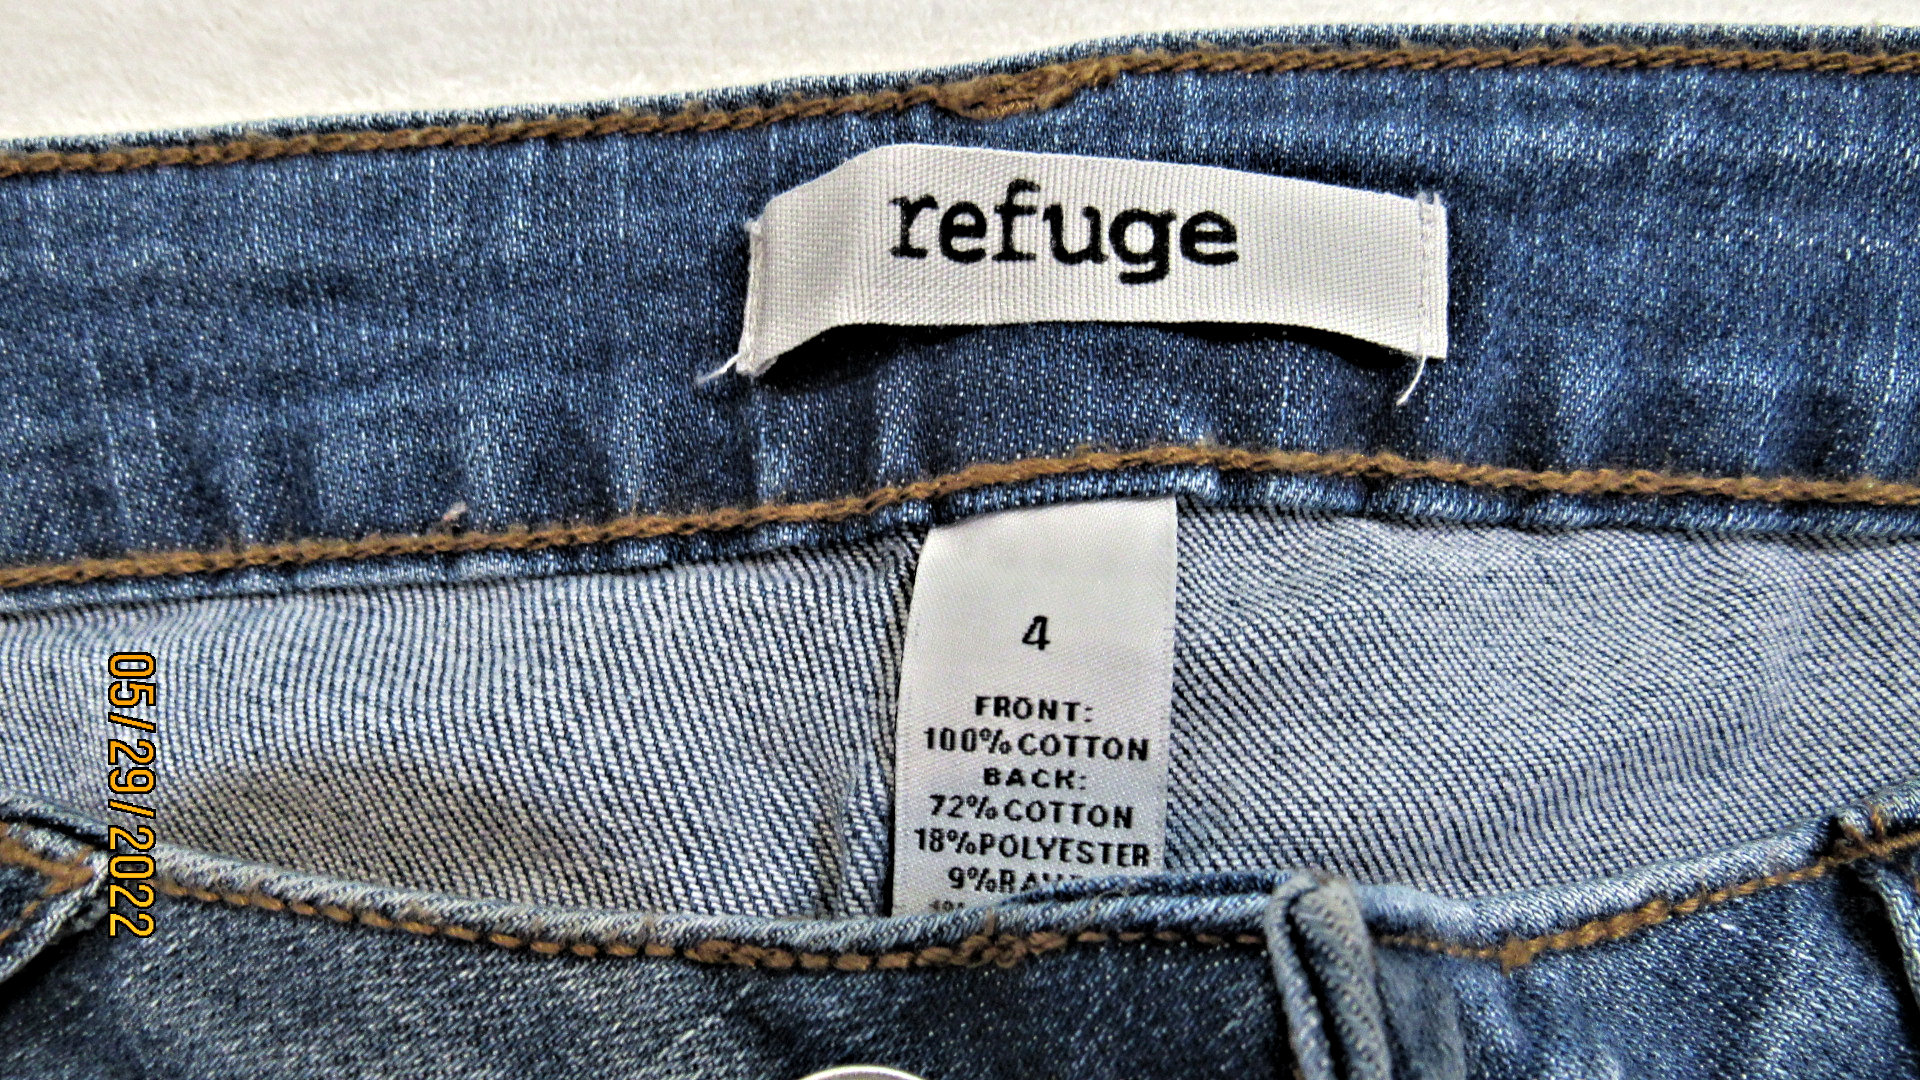 Stylish Wide Jeans - Refuge